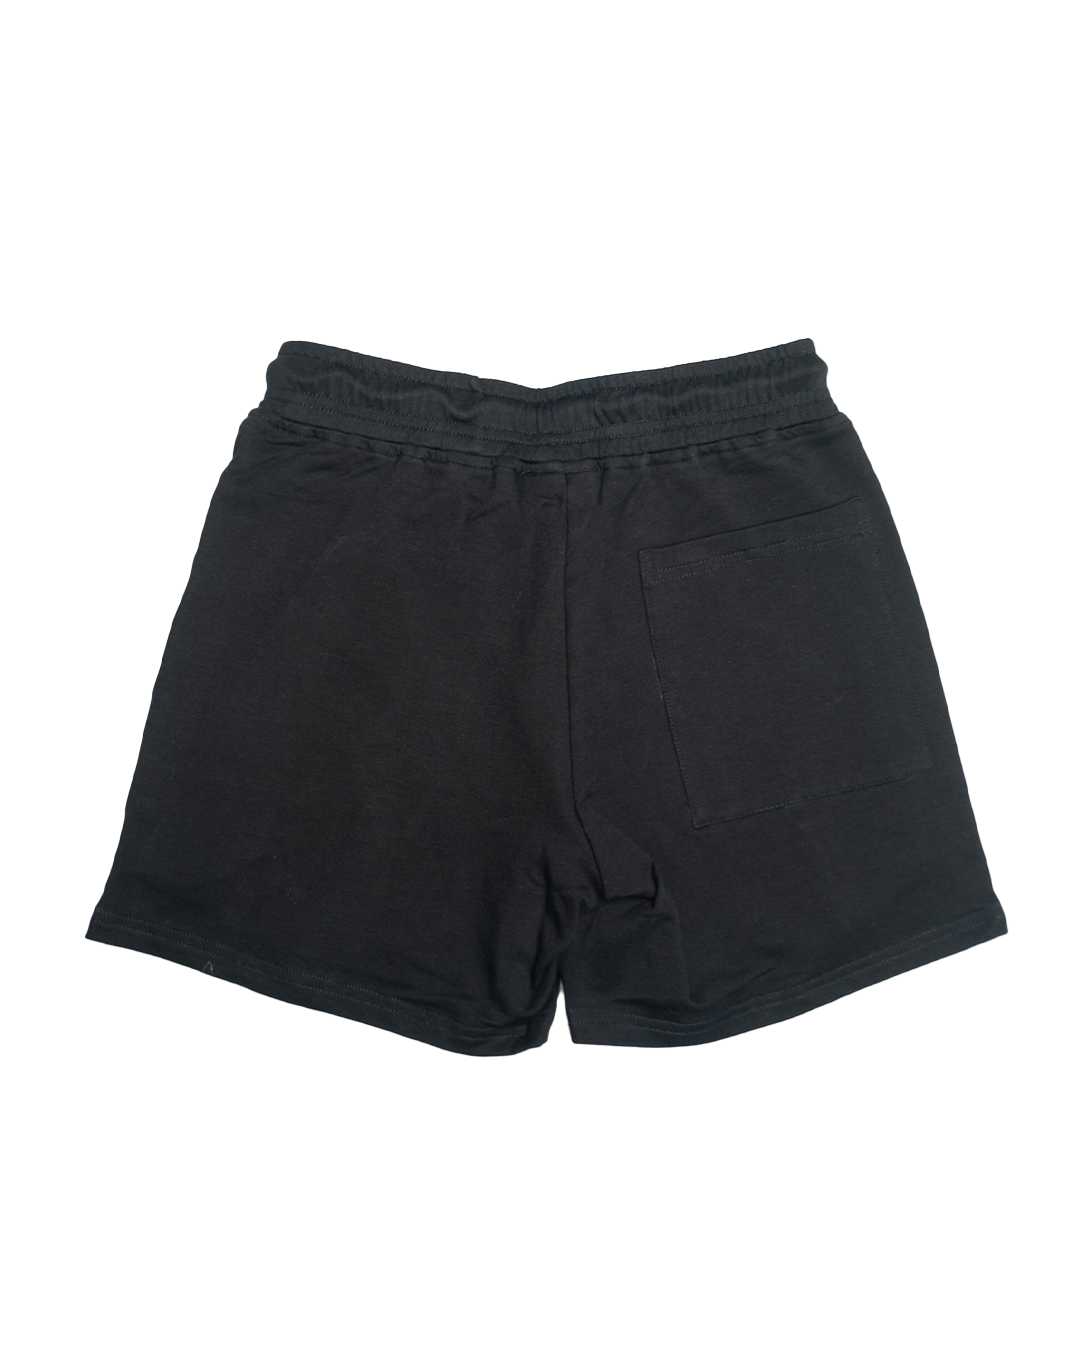 Black 5" French Cotton Shorts